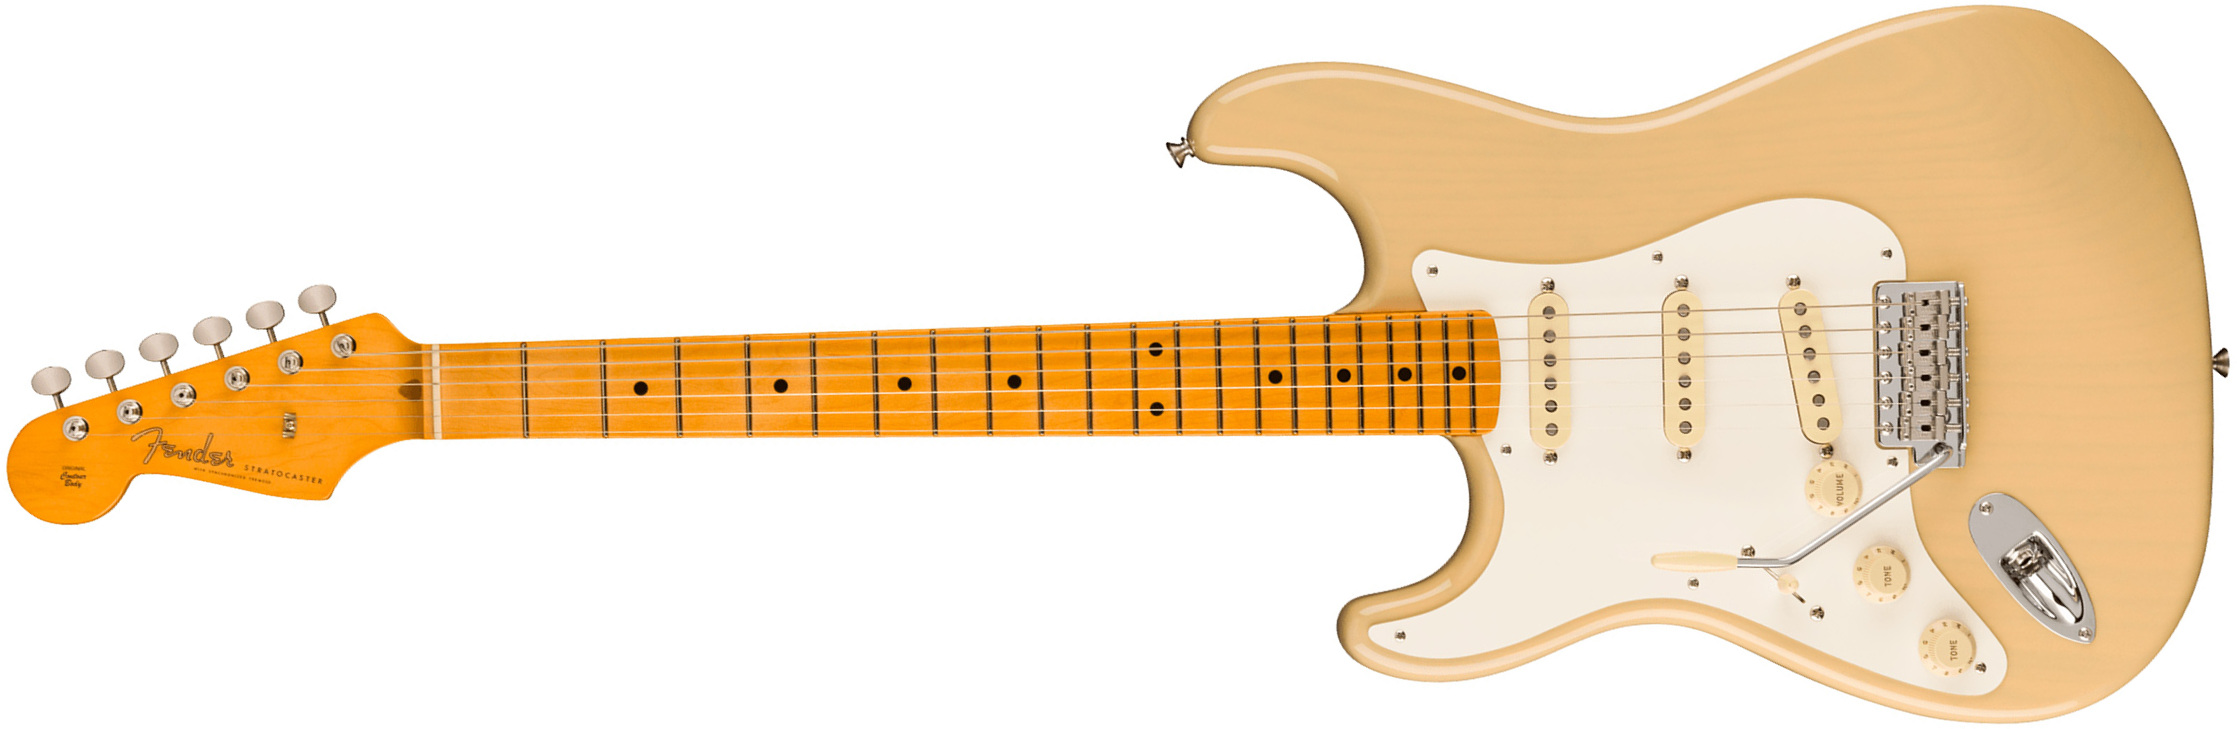 Fender Strat 1957 American Vintage Ii Lh Gaucher Usa 3s Trem Mn - Vintage Blonde - Guitare Électrique Gaucher - Main picture